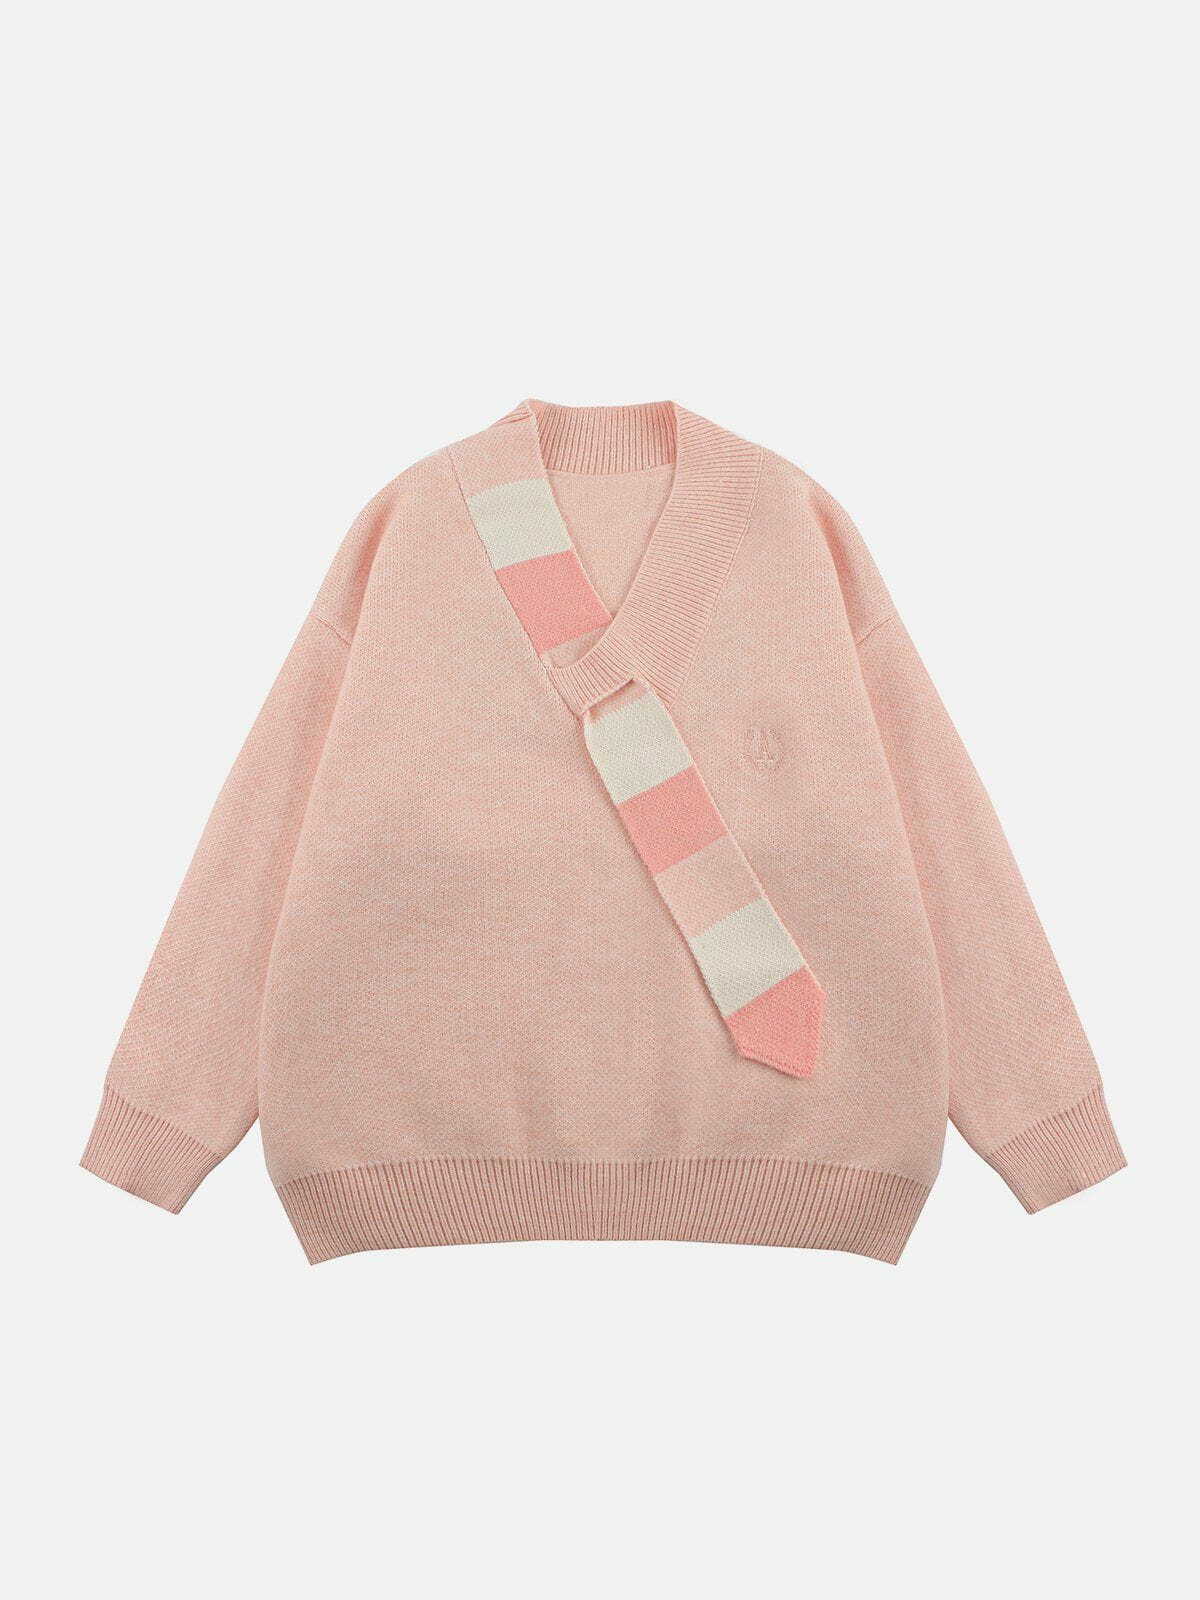 vibrant vneck sweater chic & cozy streetwear 2493